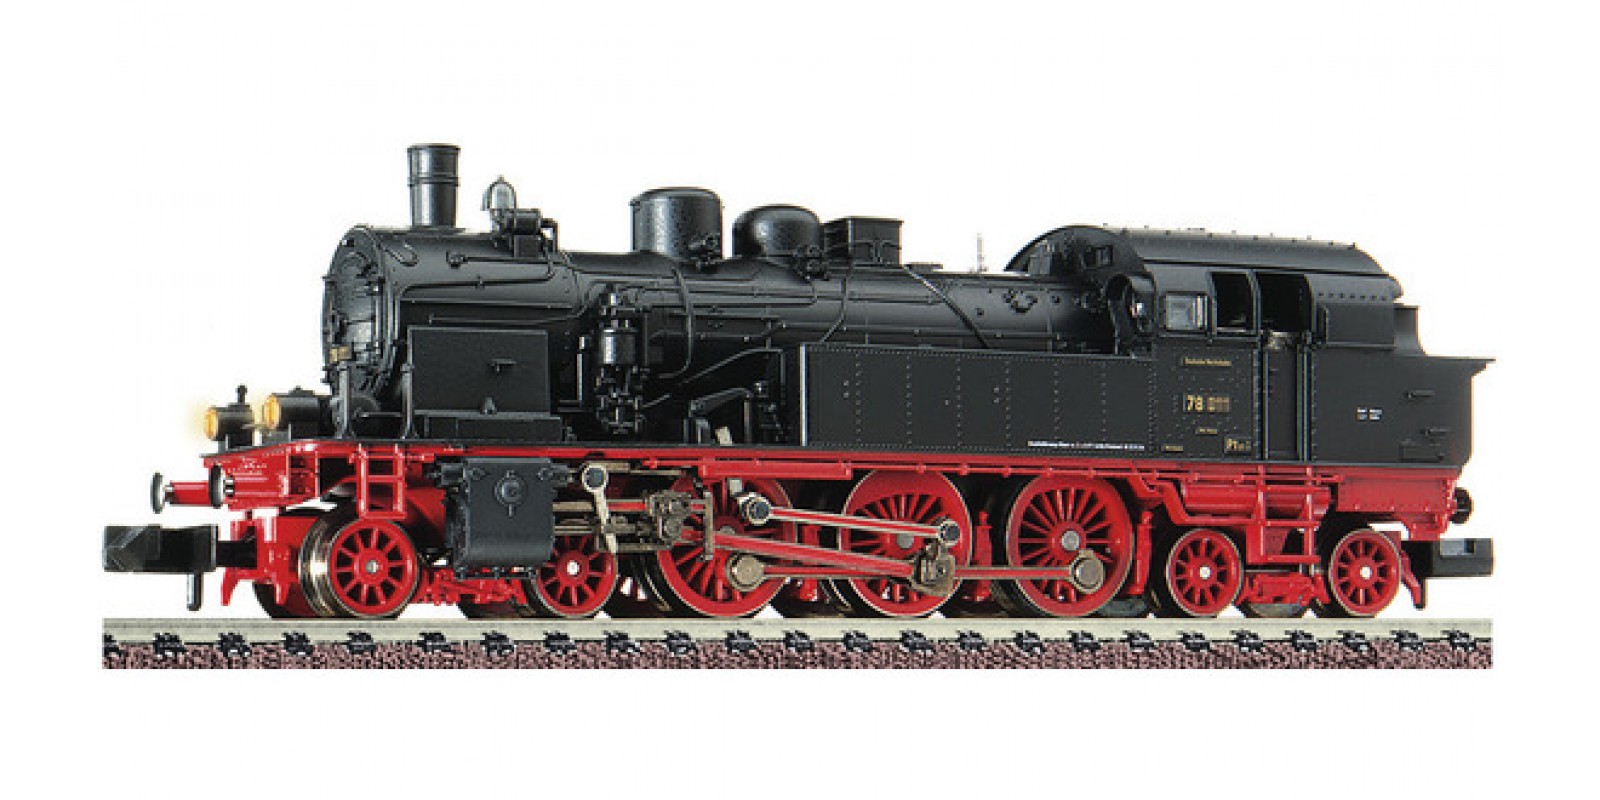 FL707502 - Steam locomotive class 78.0-5, DRG